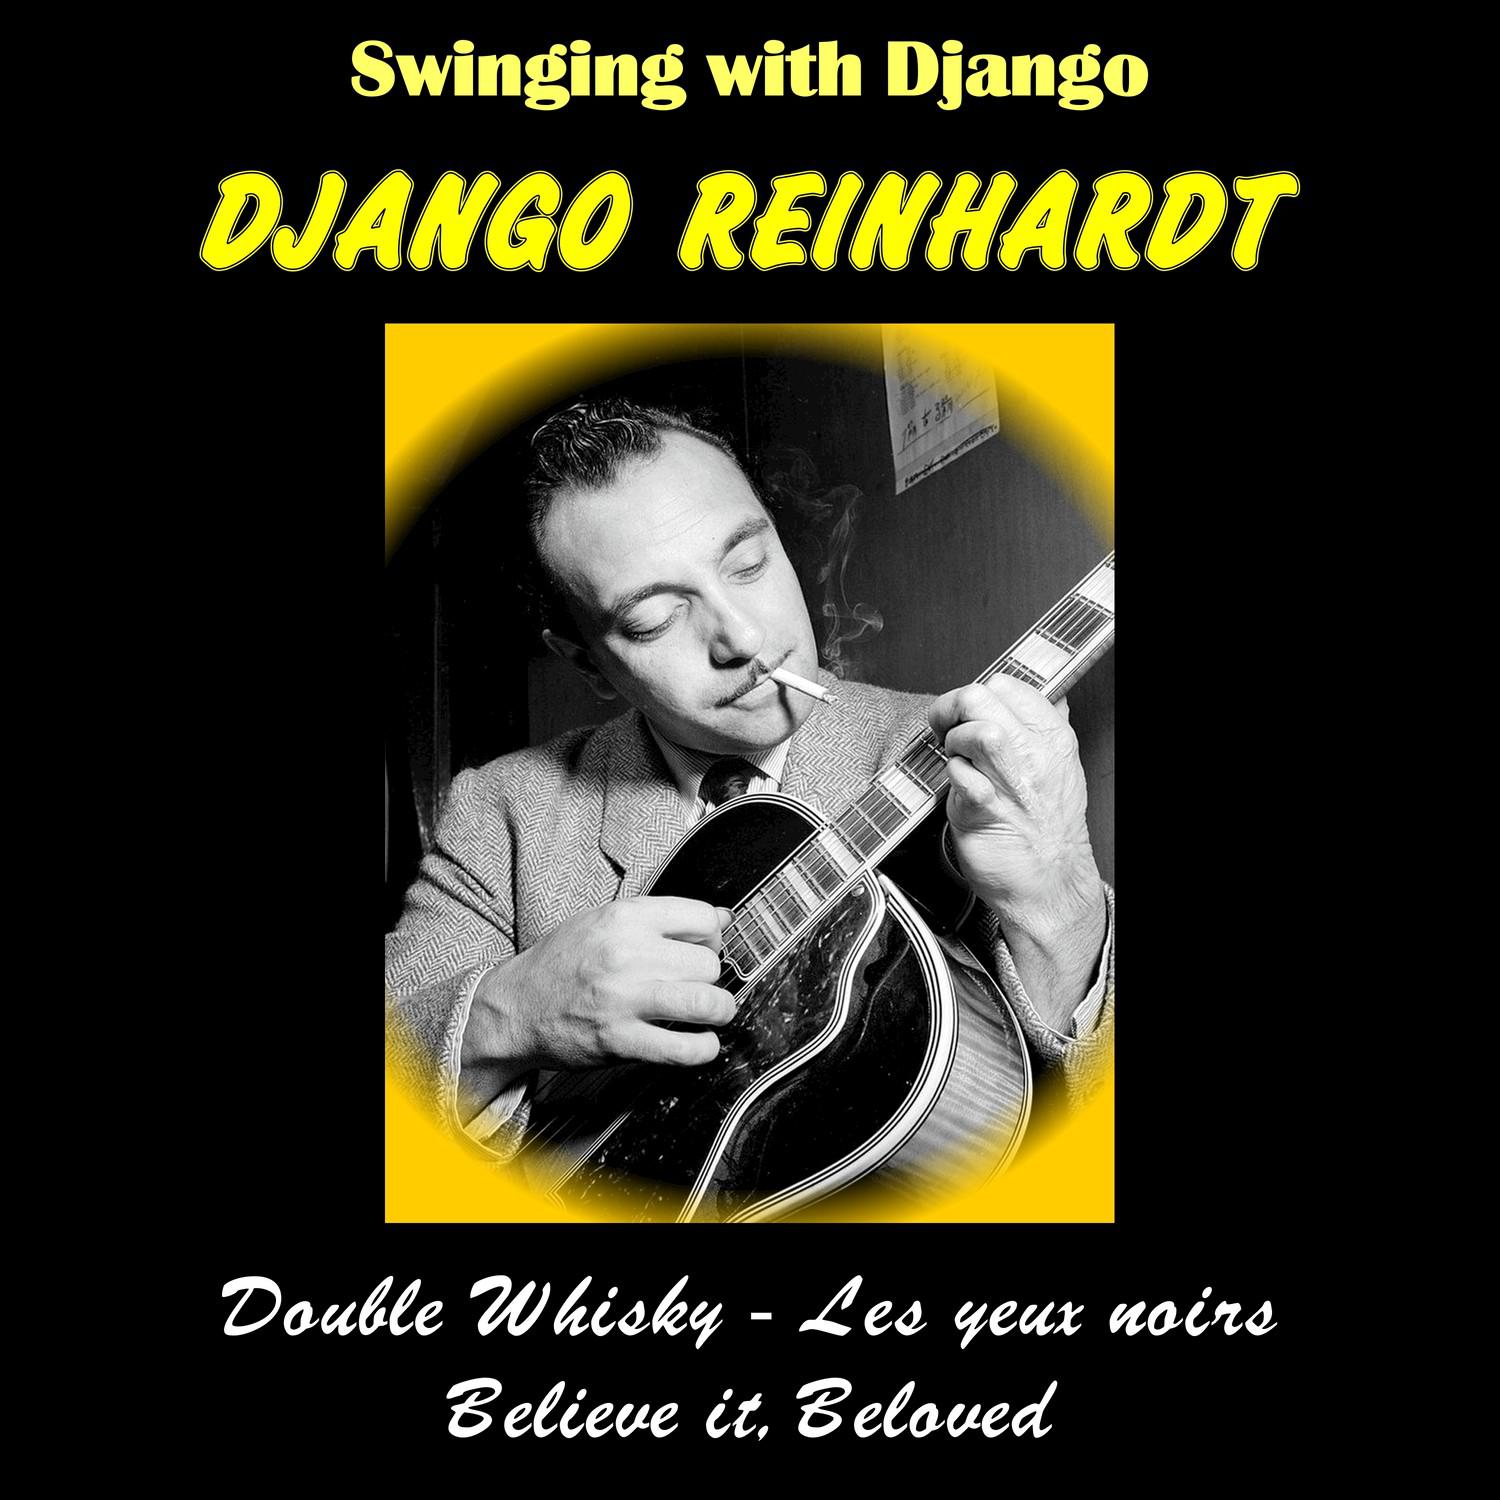 Swinging with Django